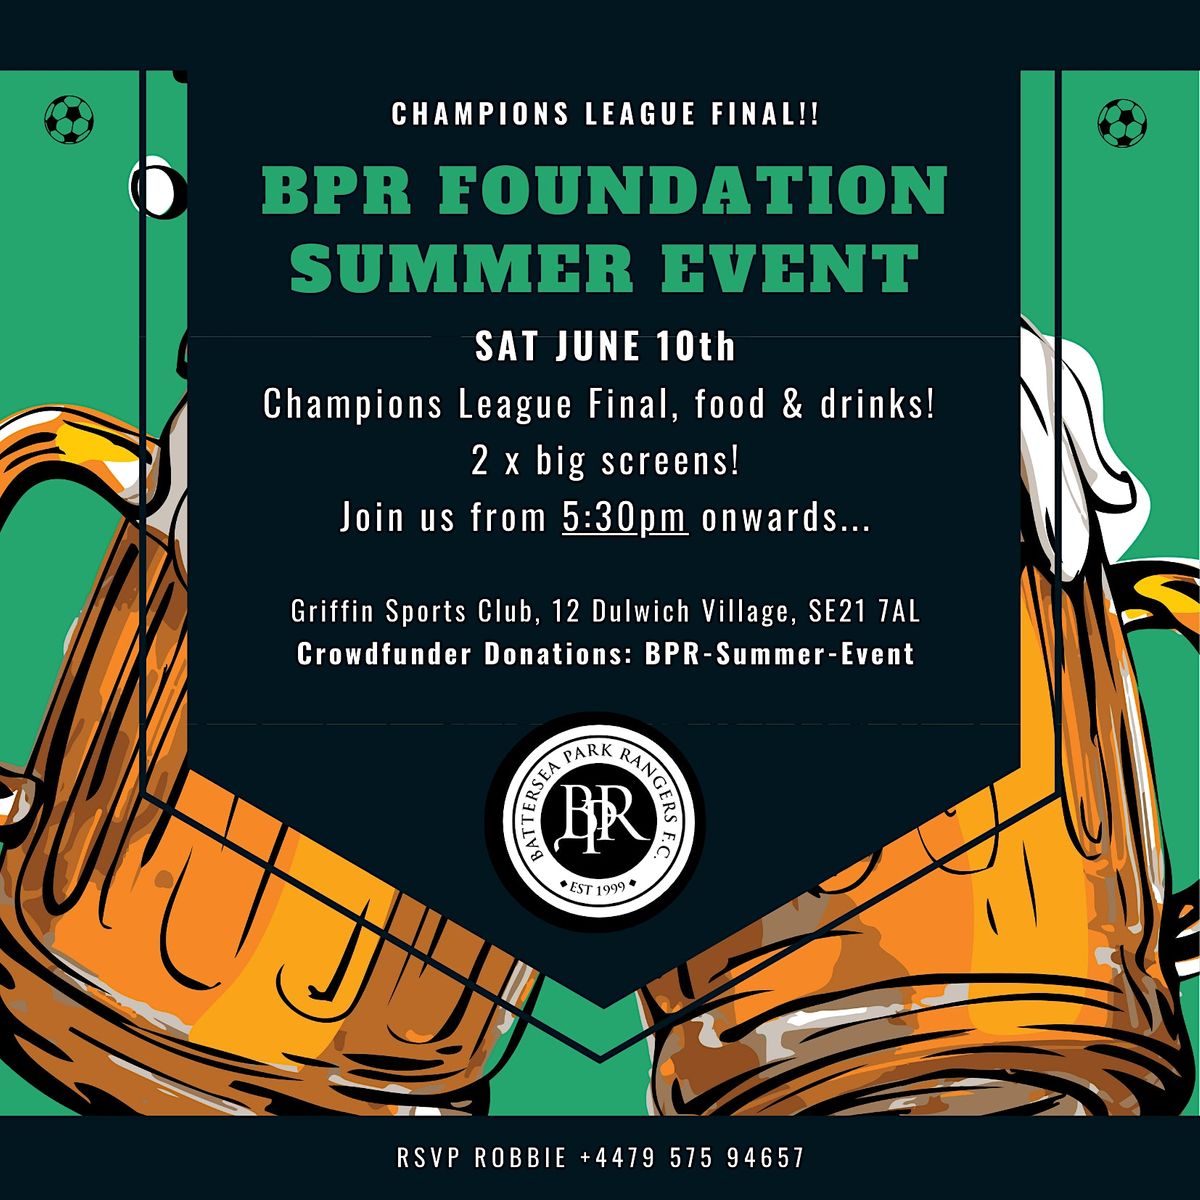 BPR FOUNDATION SUMMER EVENT | Champions League Final, Food & Drinks!